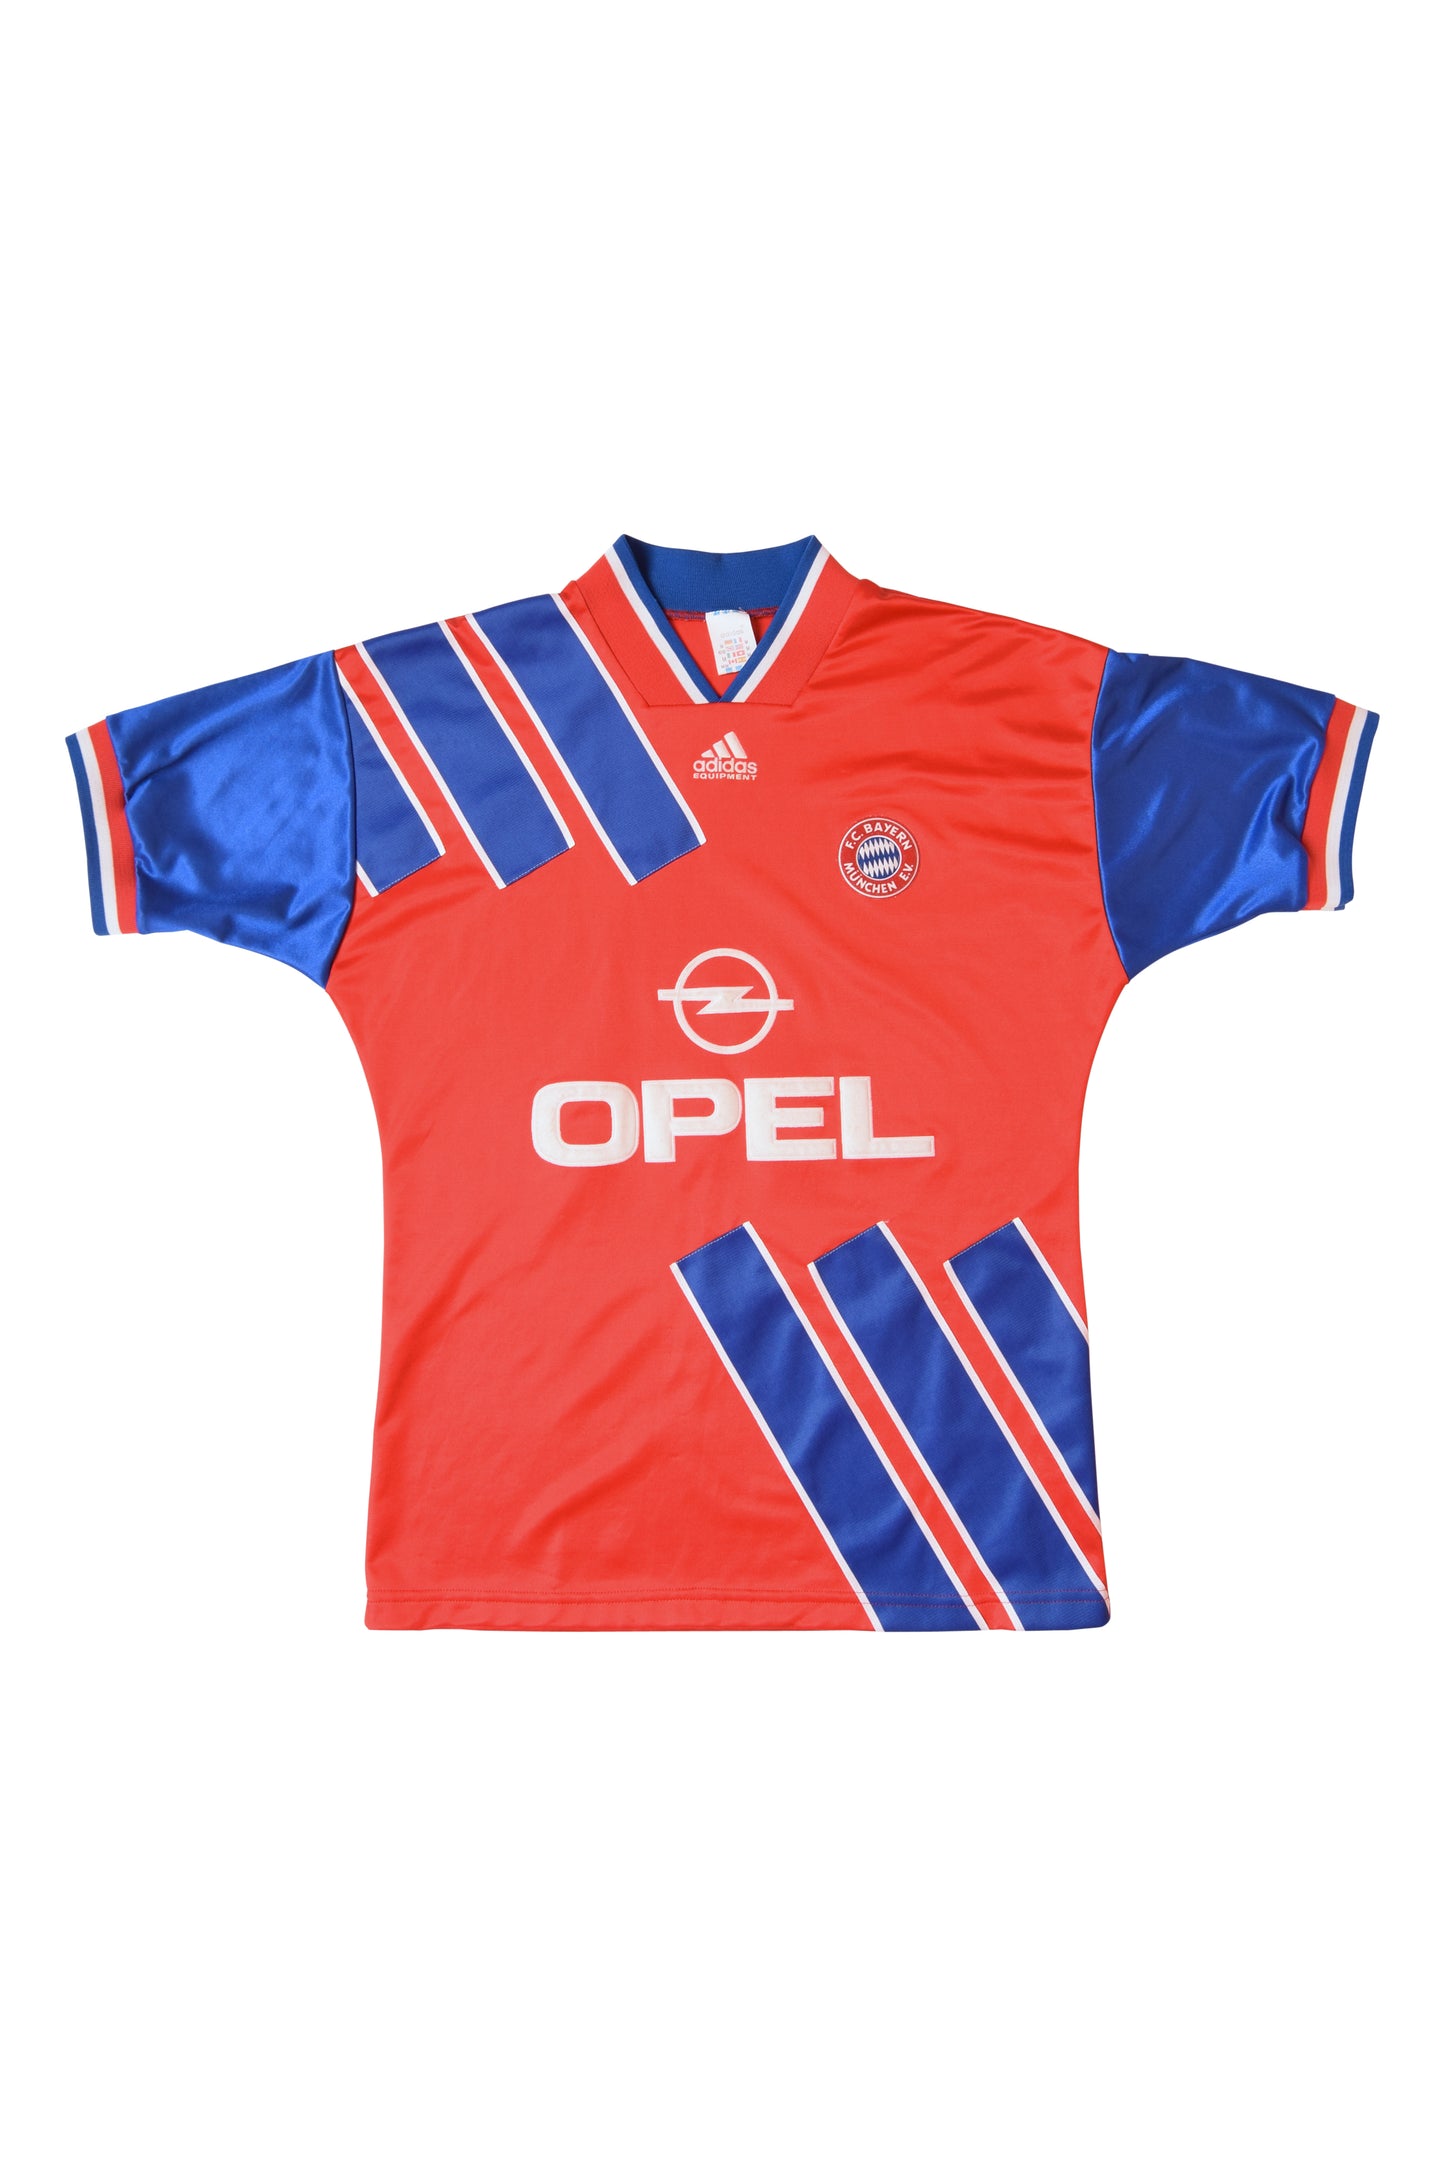  Vintage Adidas Equipment Bayern Munchen Football Shirt Home 1993-1995 Red Opel Size M